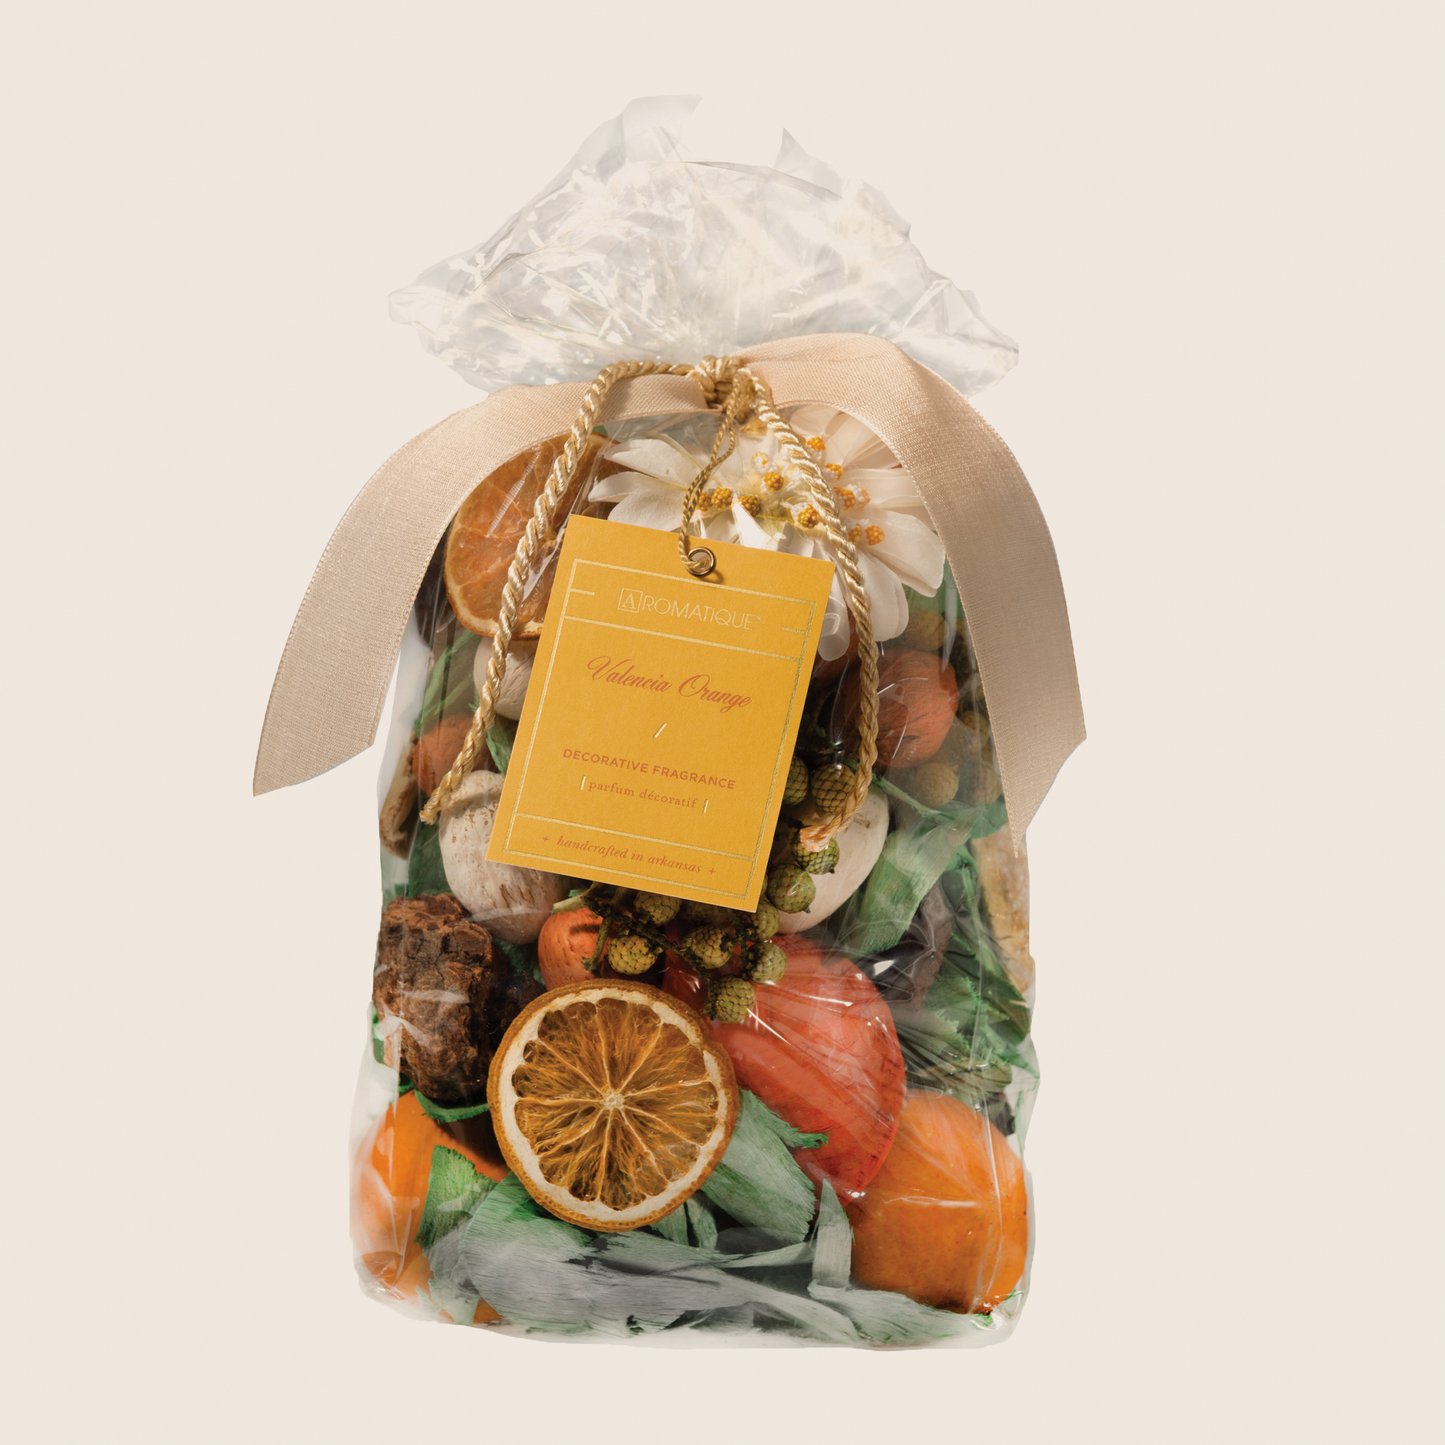 Valencia Orange - Large Decorative Fragrance Bag